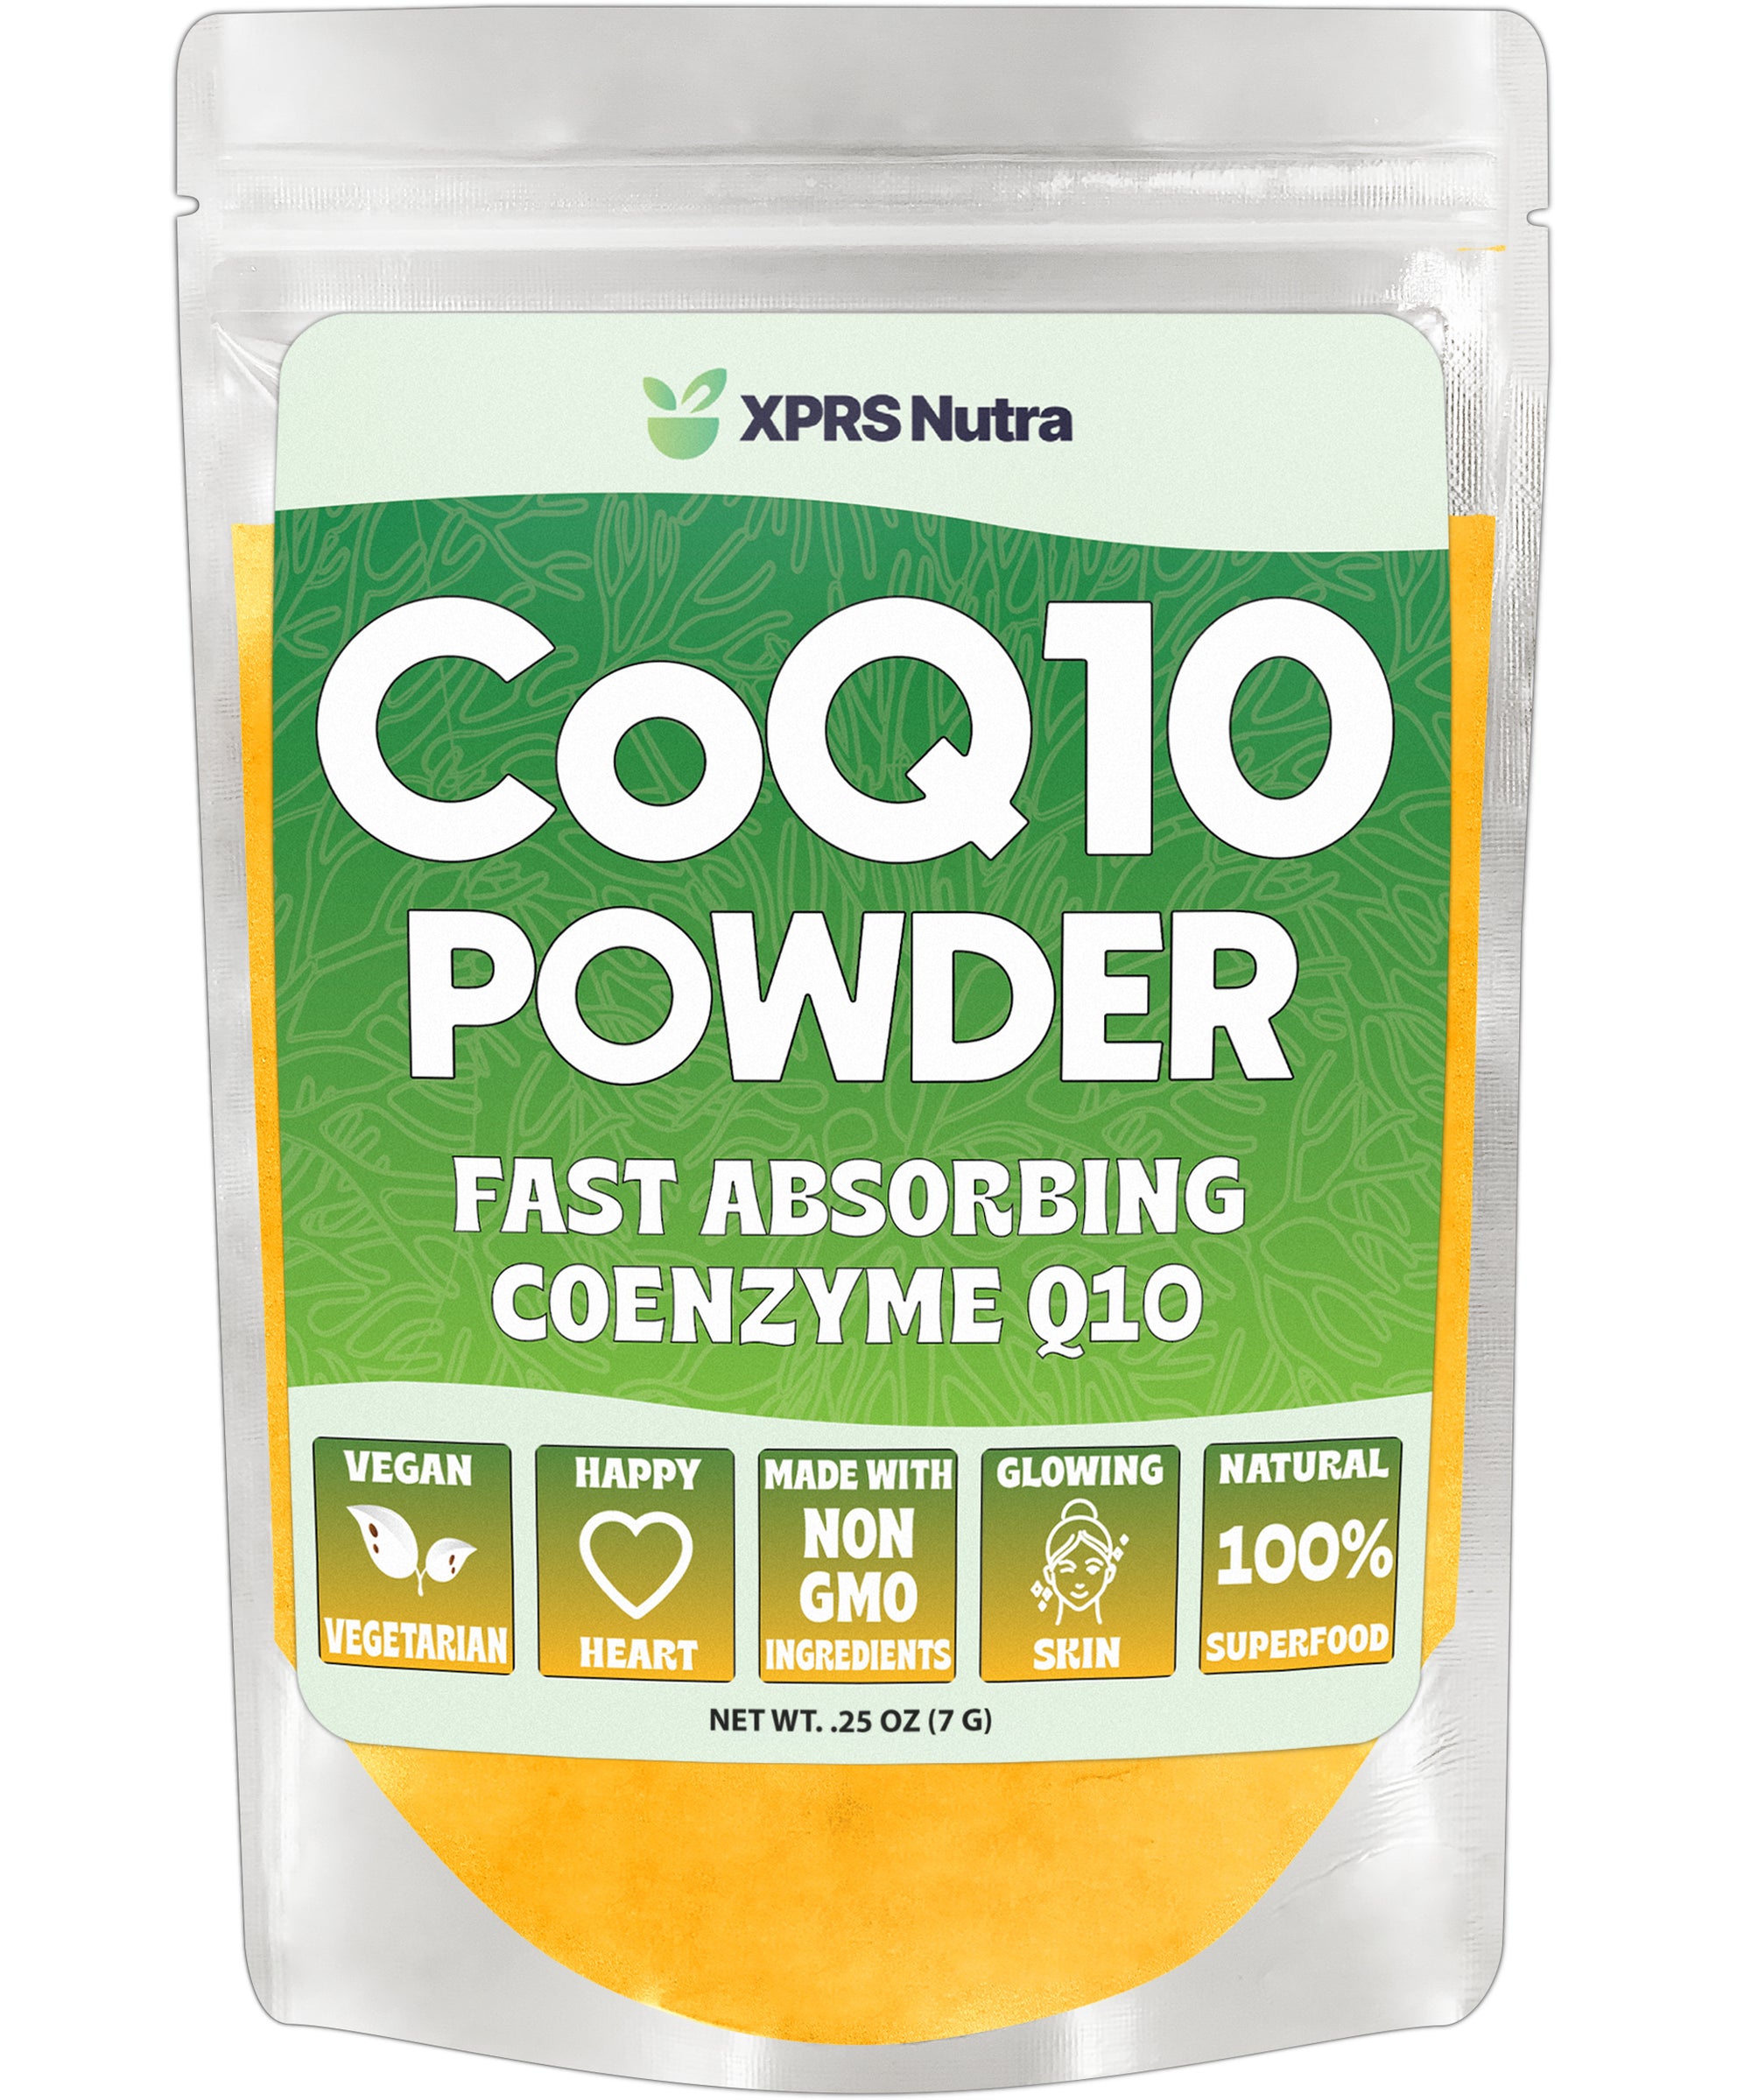 COQ10 Powder (Coenzyme Q10)